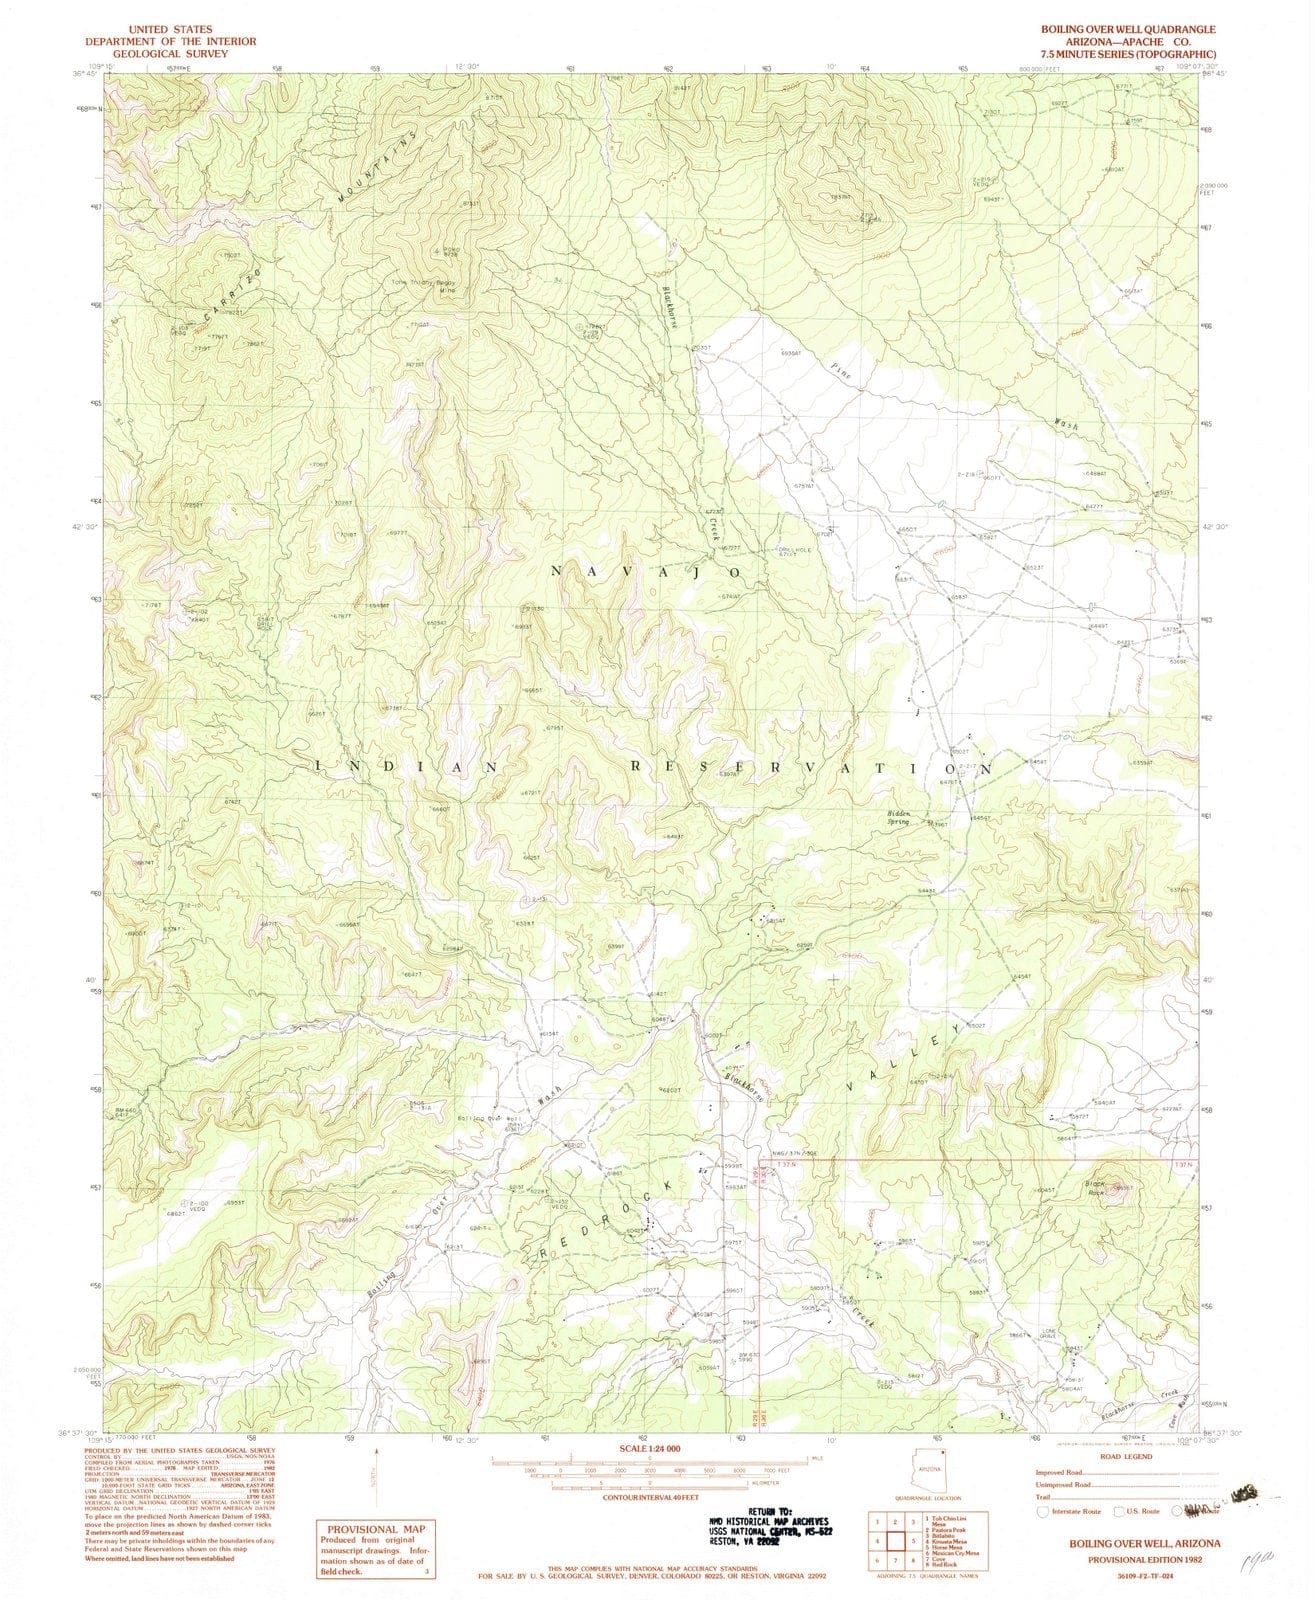 1982 Boiling Over Well, AZ - Arizona - USGS Topographic Map